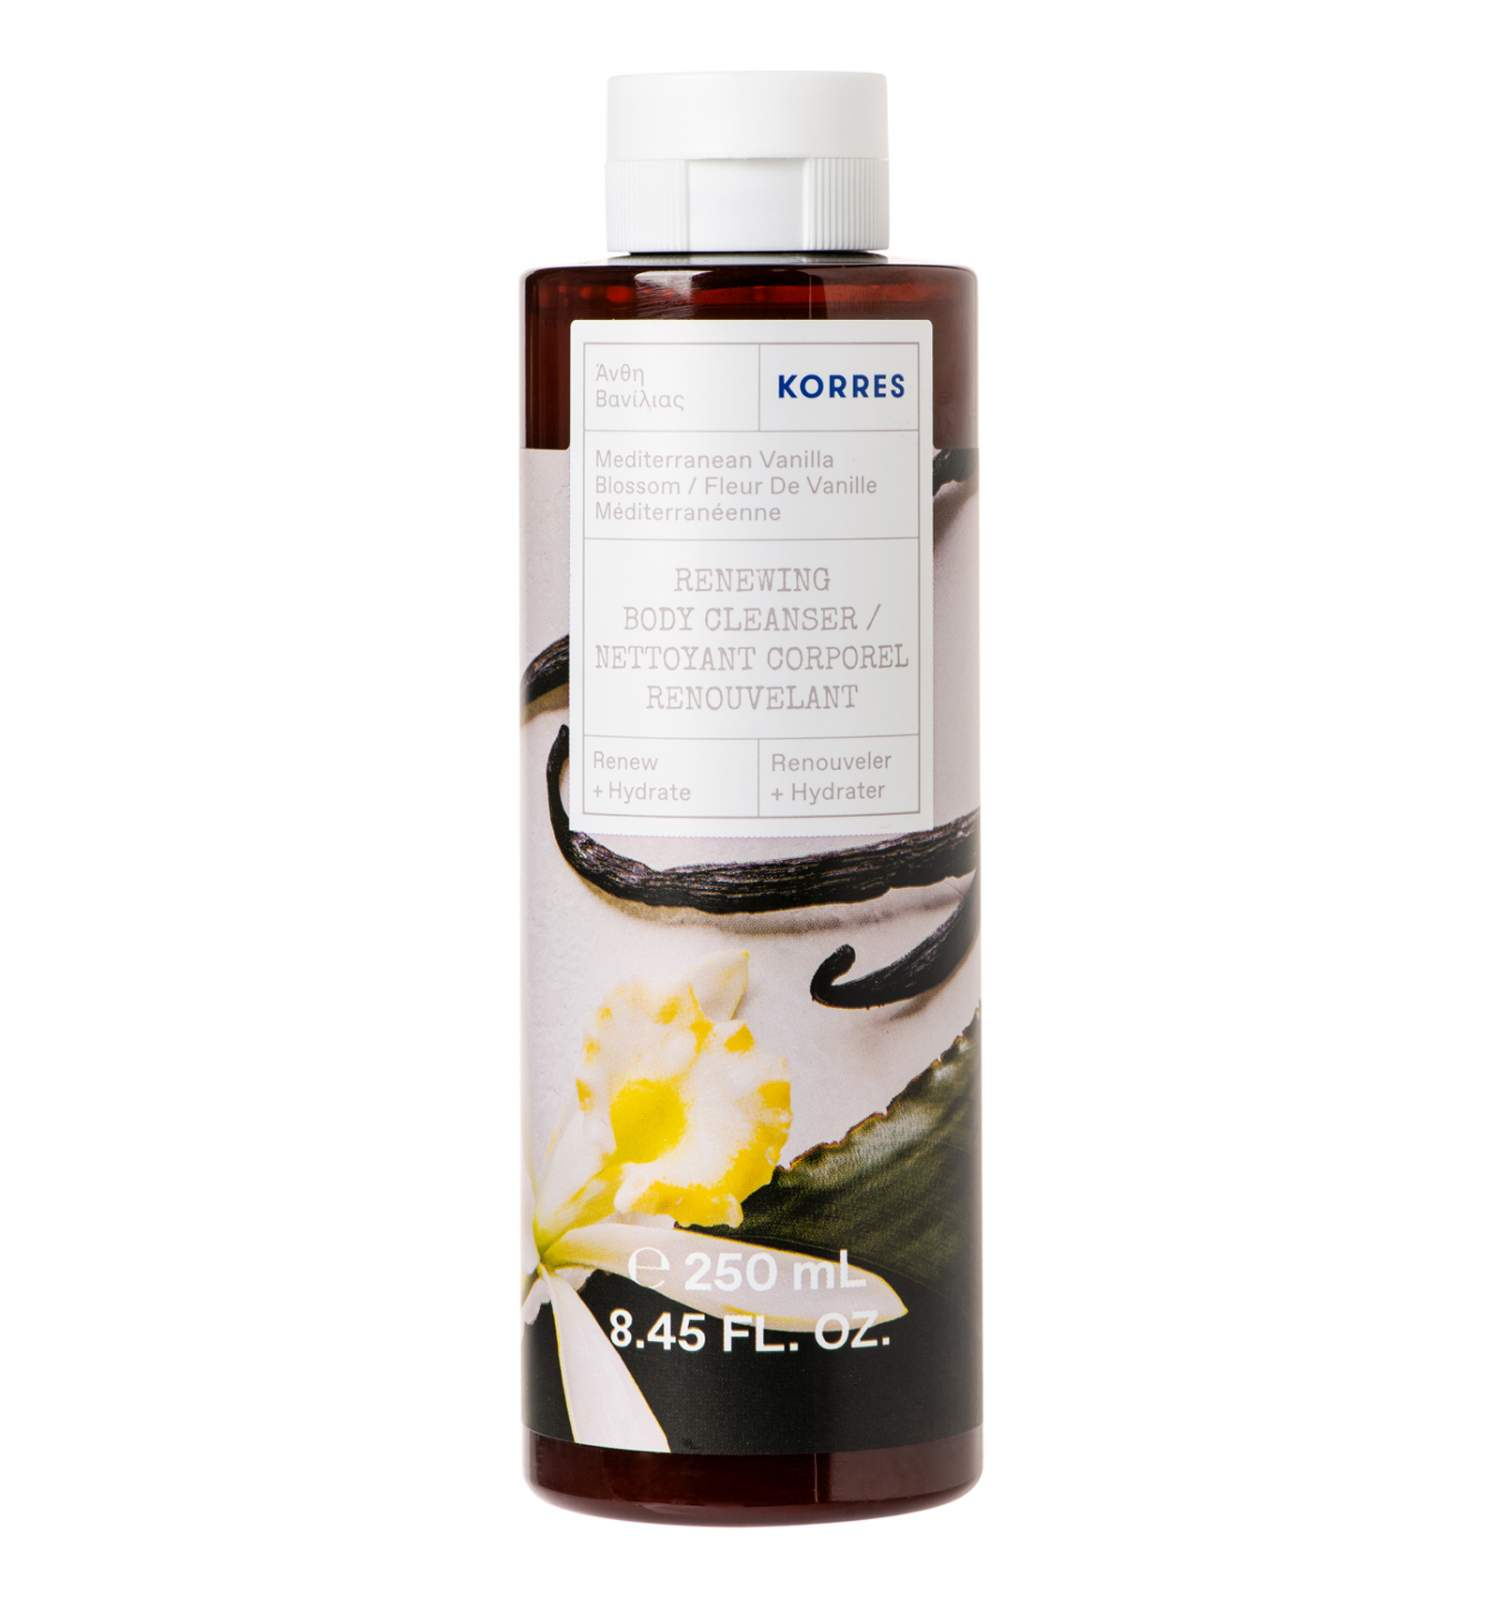 Mediterranean Vanilla Blossom Renewing Body Cleanser Korres Mediterranean Vanilla Blossom Renewing Body Cleanser 1